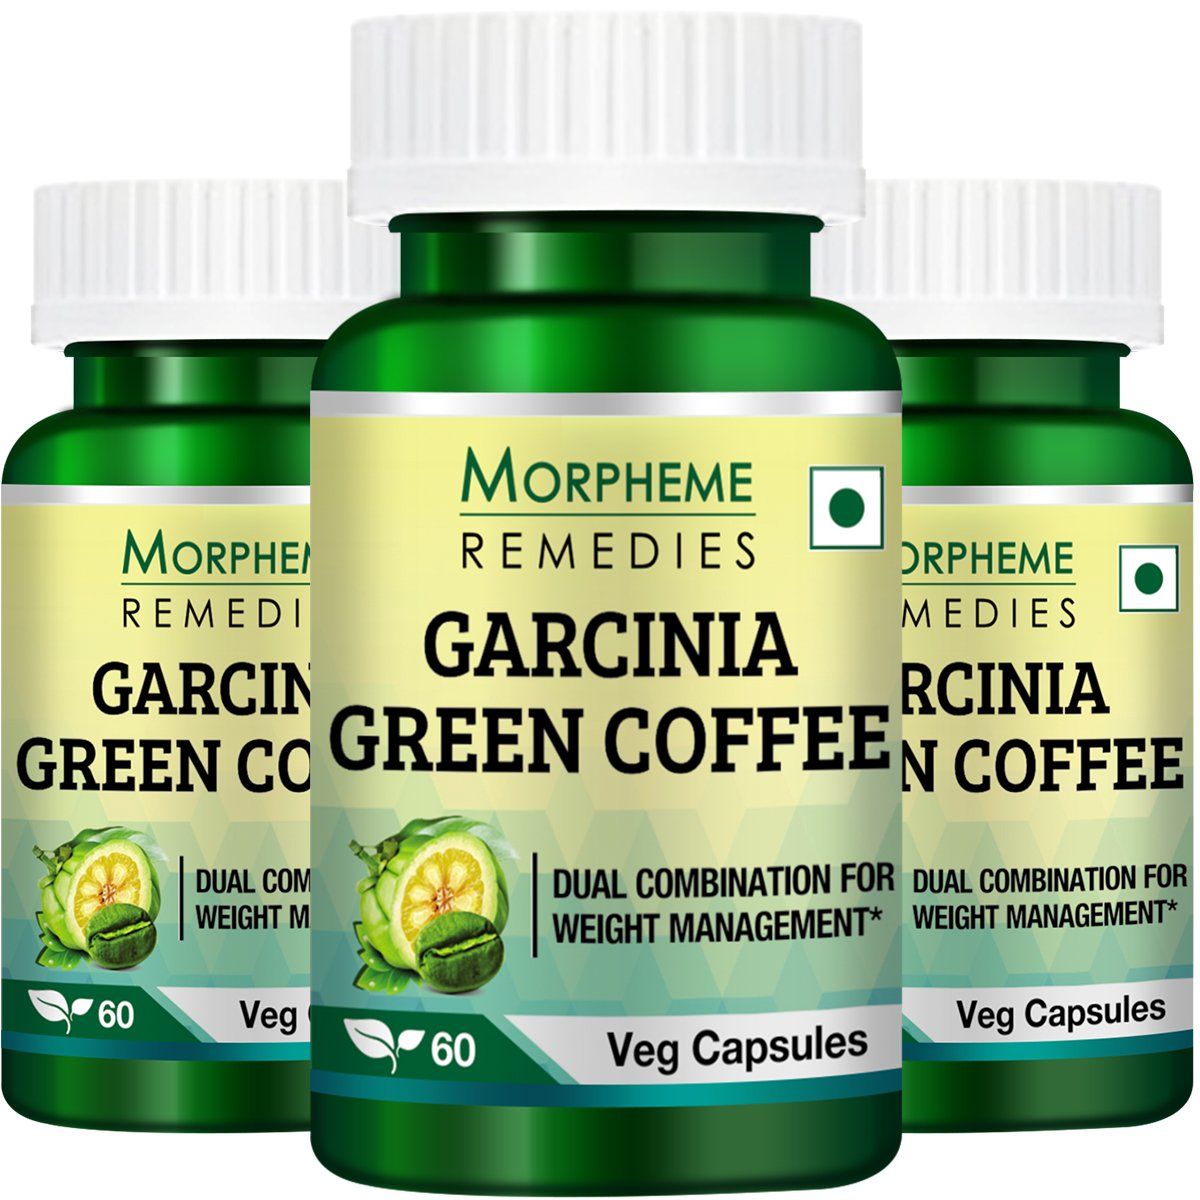 Morpheme Remedies Garcinia Green Coffee 500mg Extract - 3 Bottles